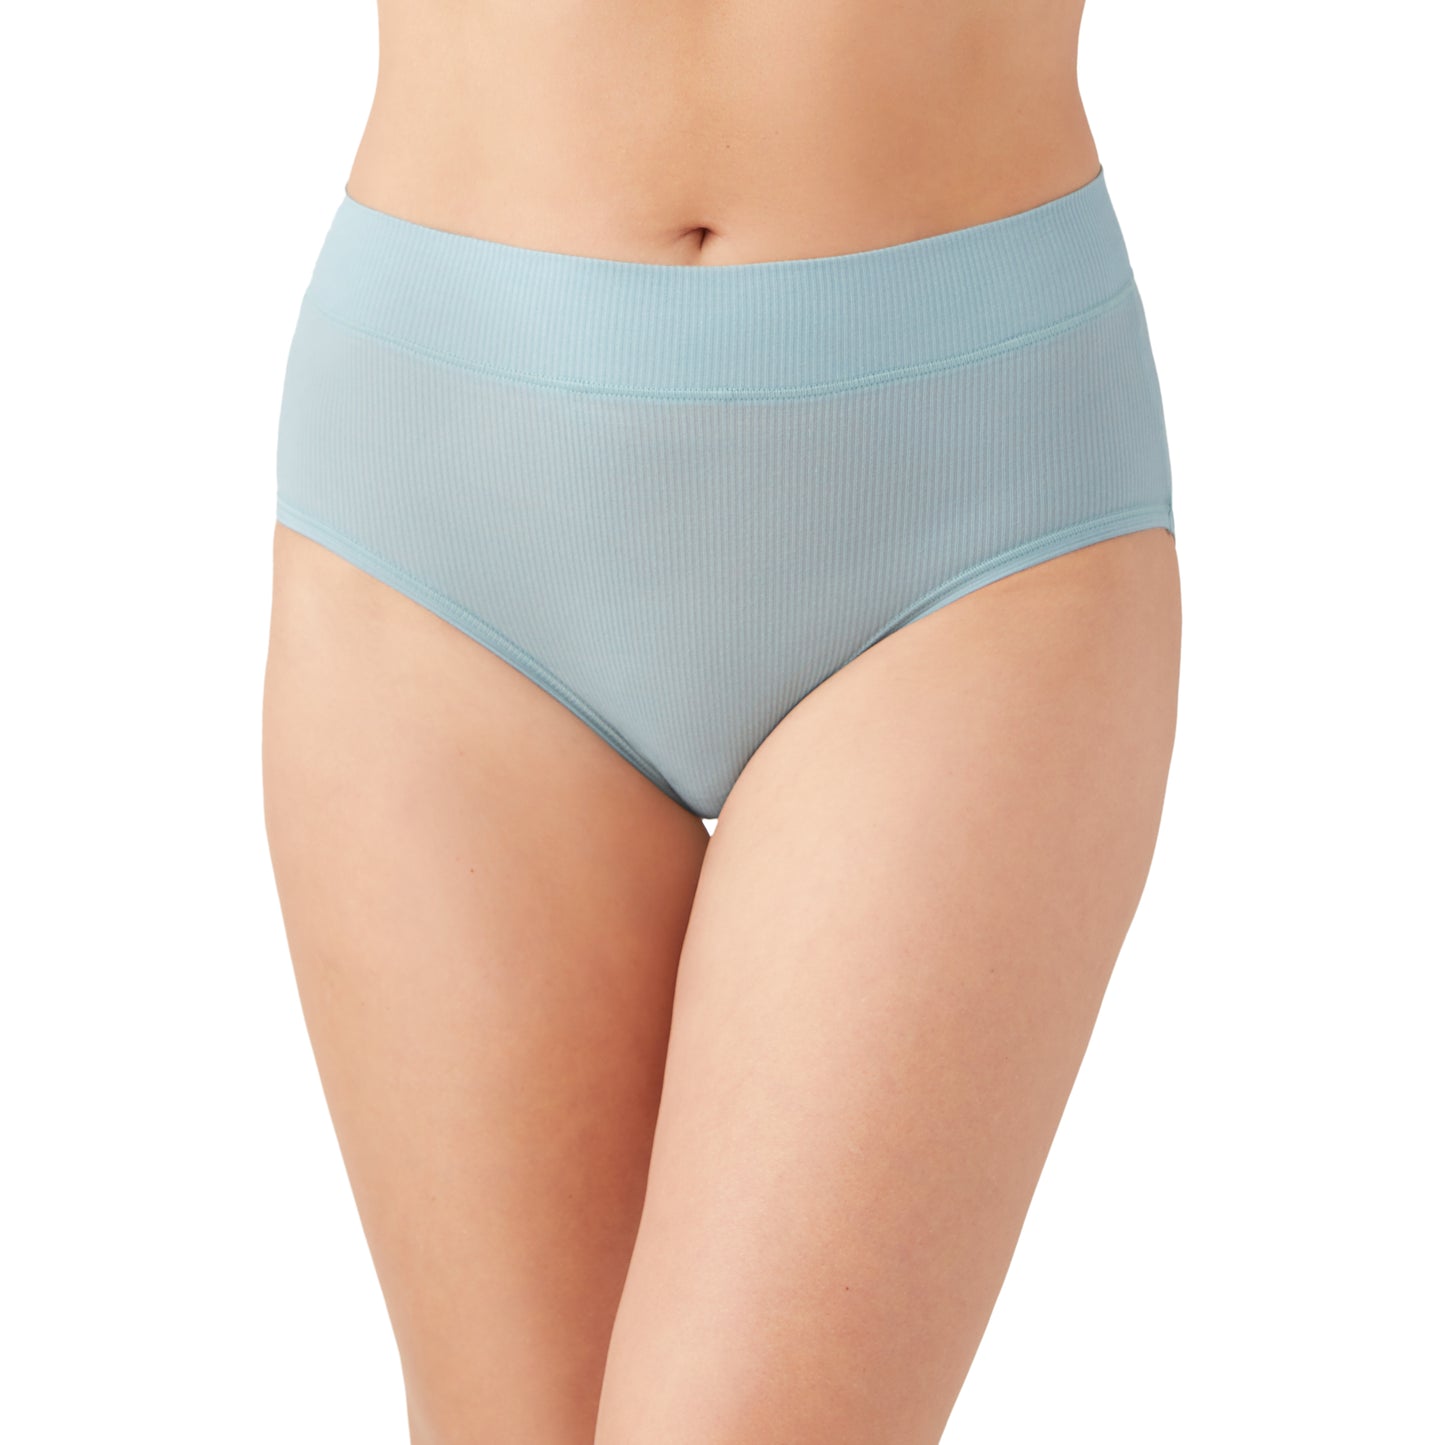 Balancing Act Brief - 875349 Bras & Lingerie - Underwear - Hi-Cut Brief Wacoal BLUE S 